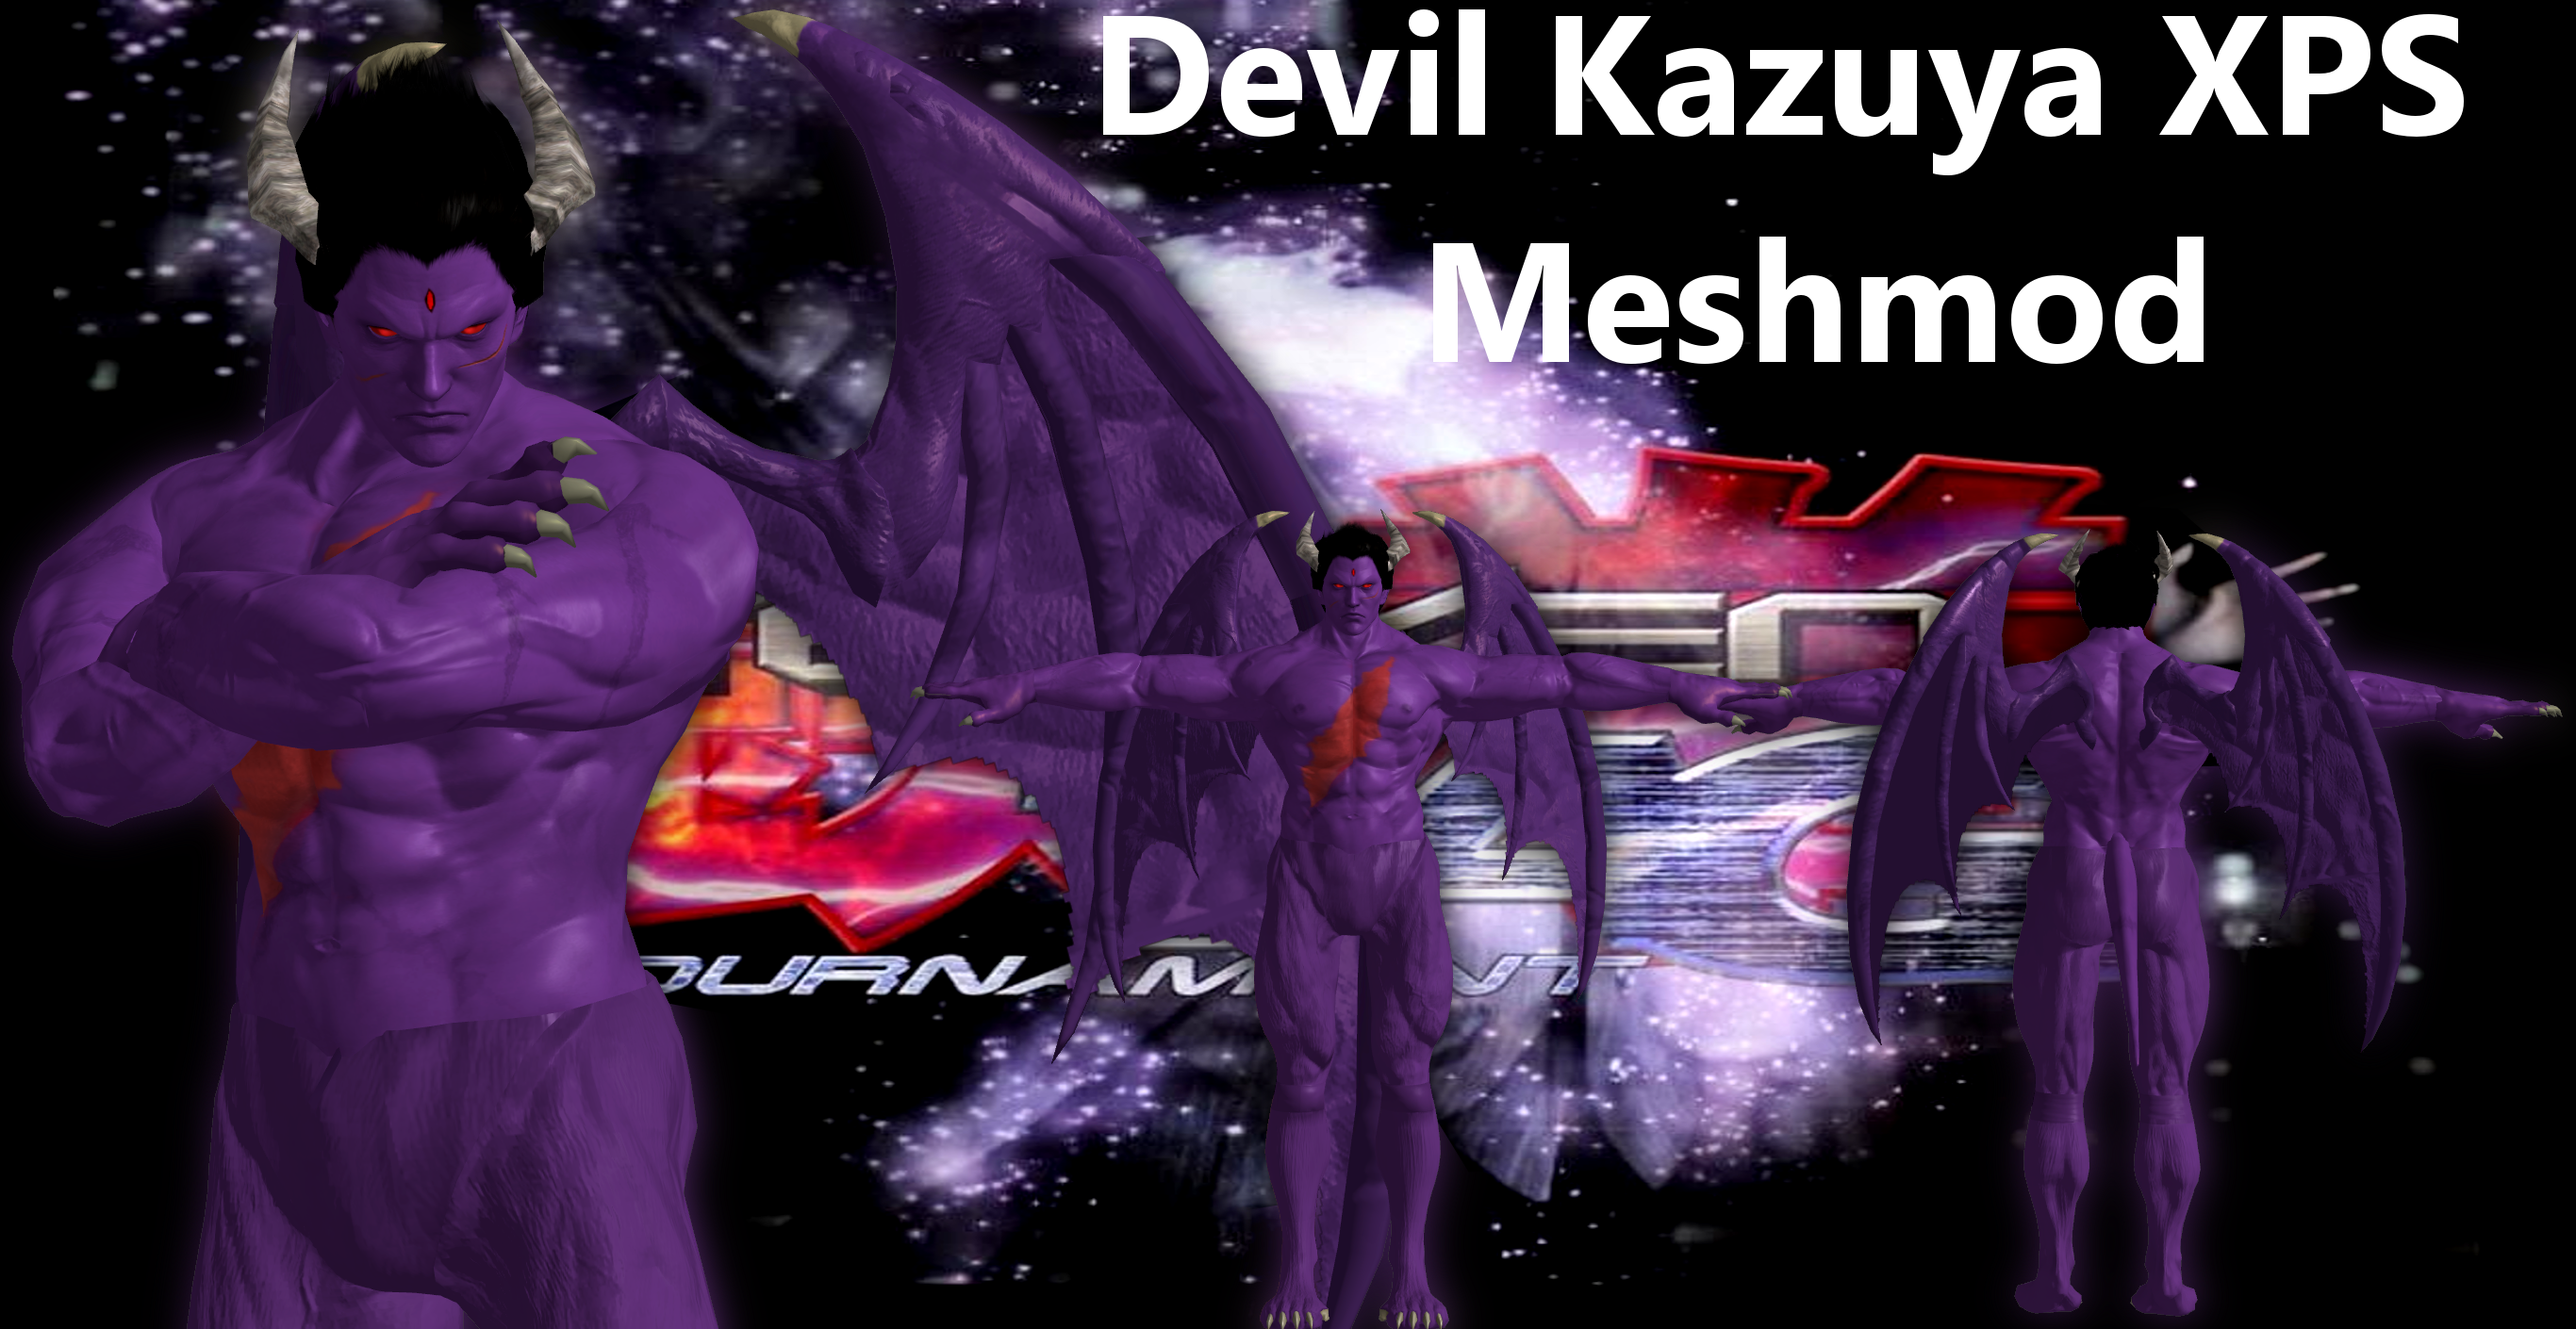 Devil Kazuya XPS MeshMod.